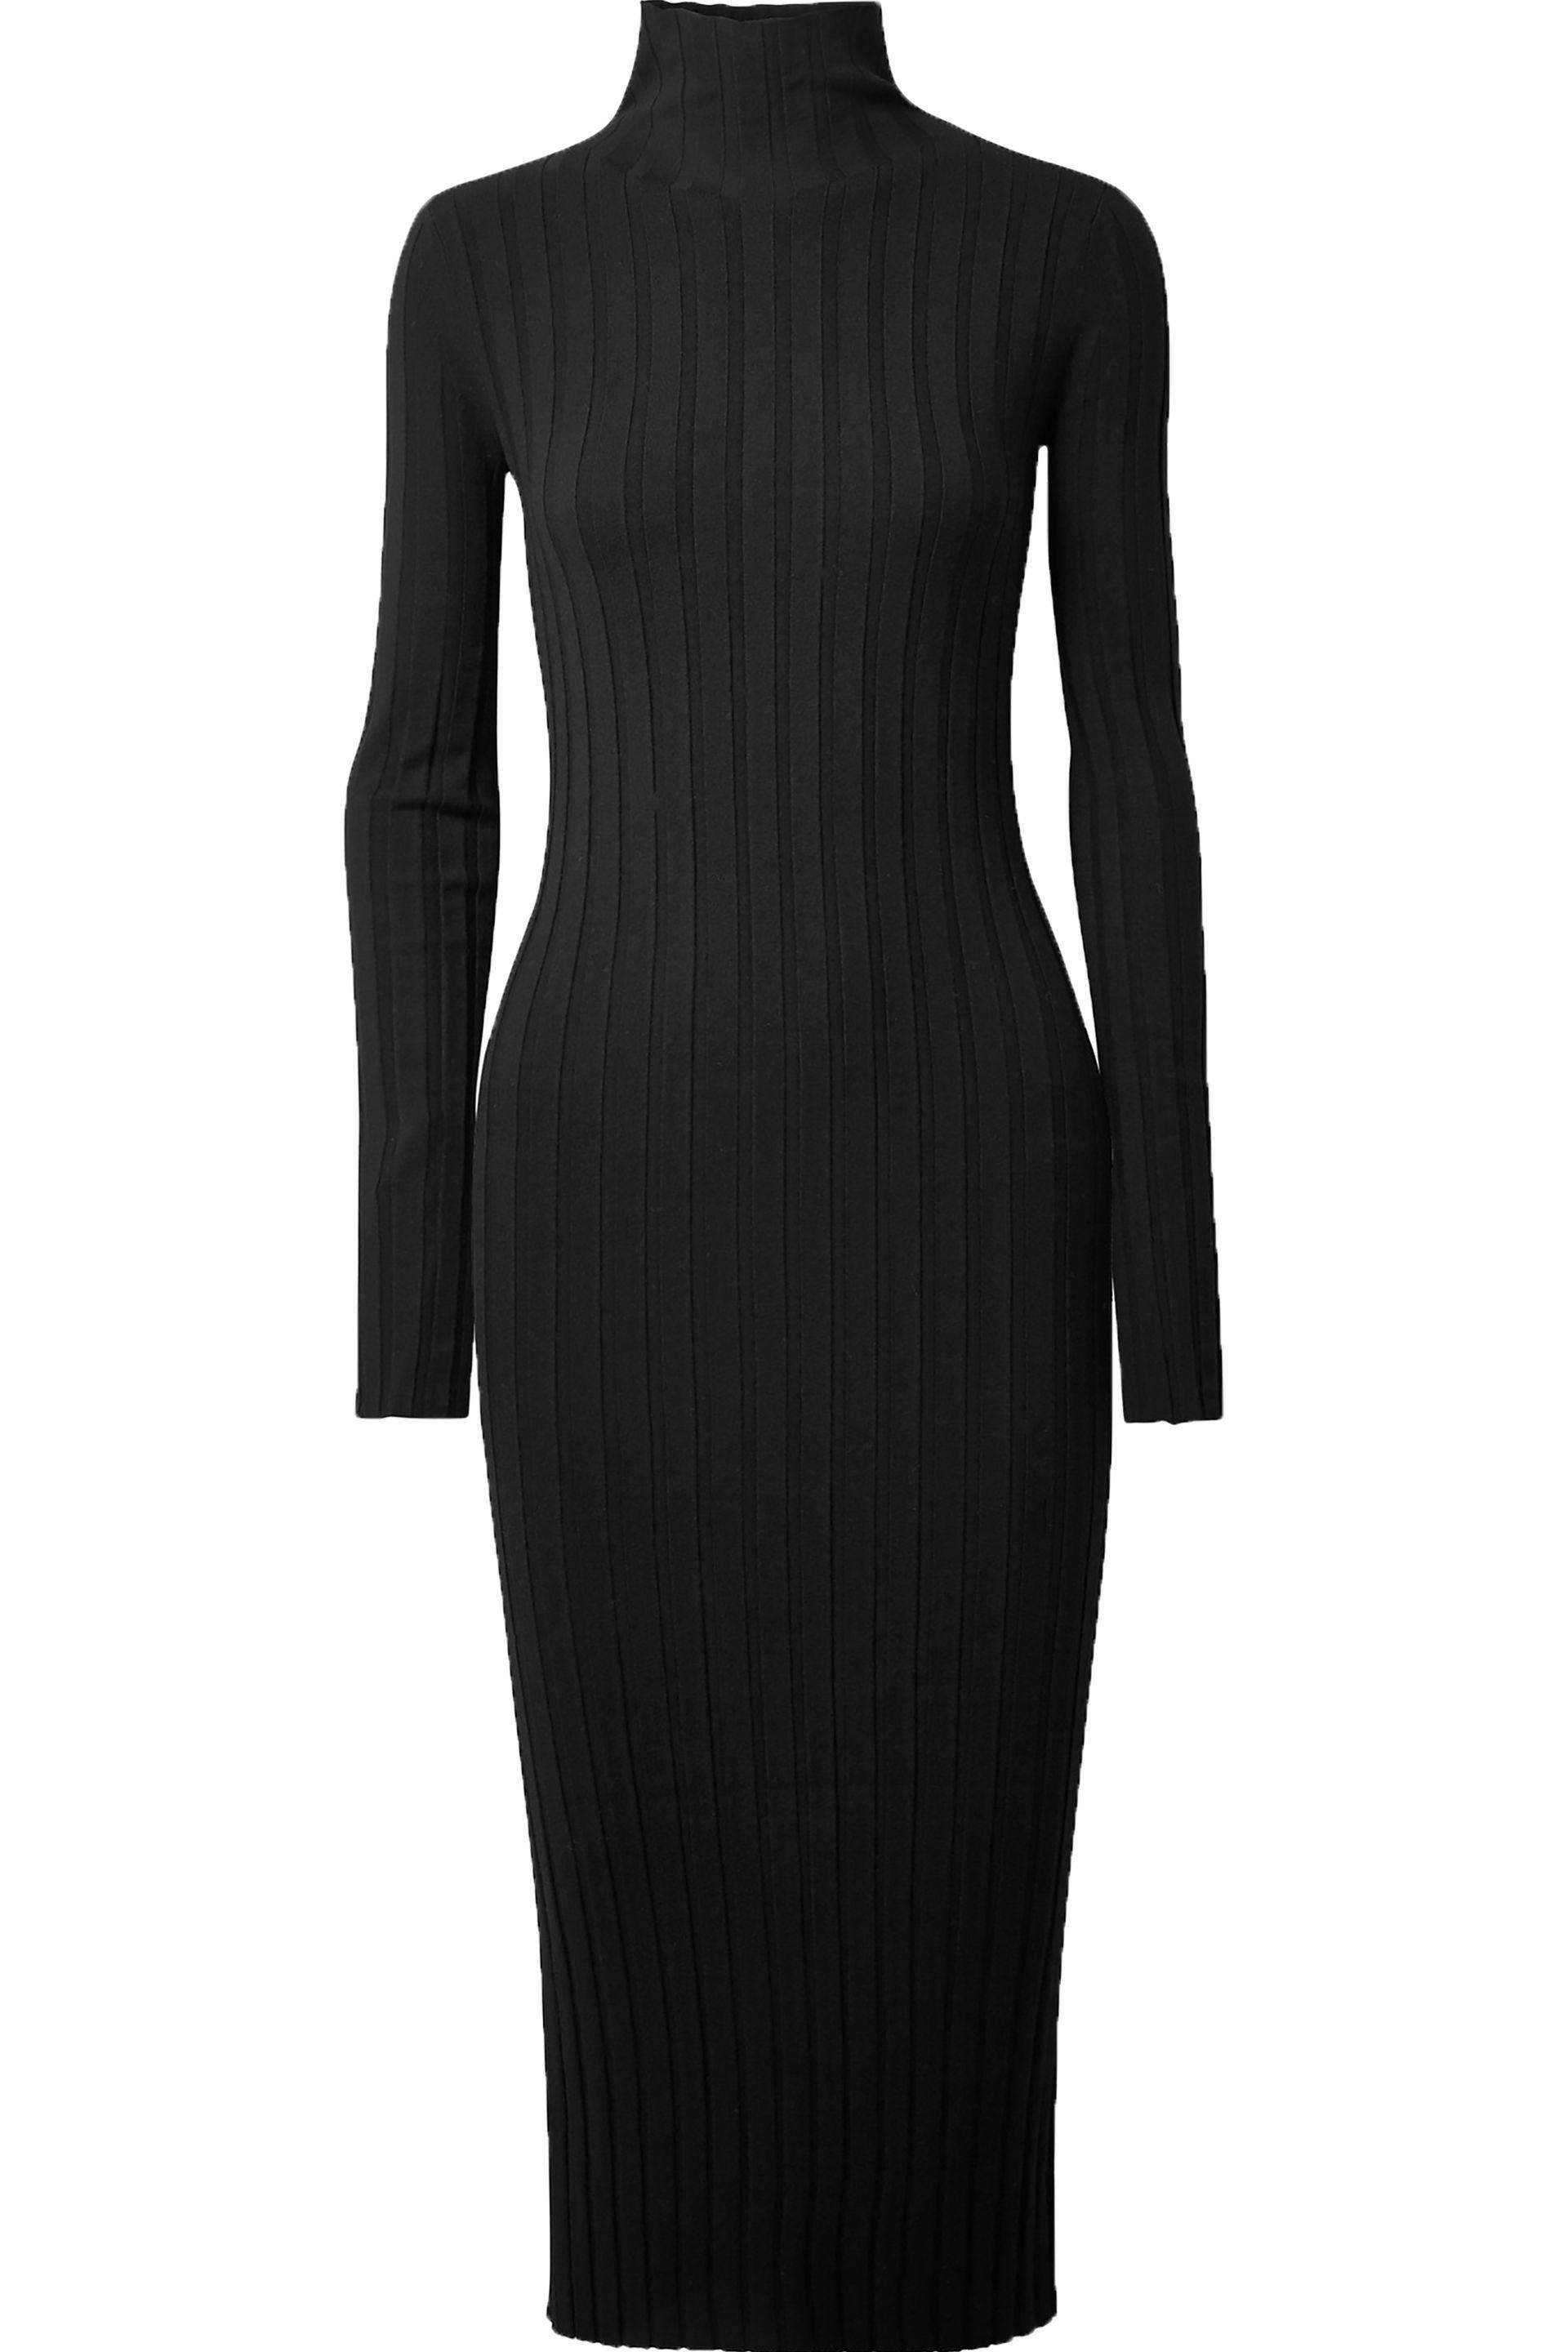 Theory Ribbed-knit Turtleneck Midi Dress Black - Save 30% - Lyst